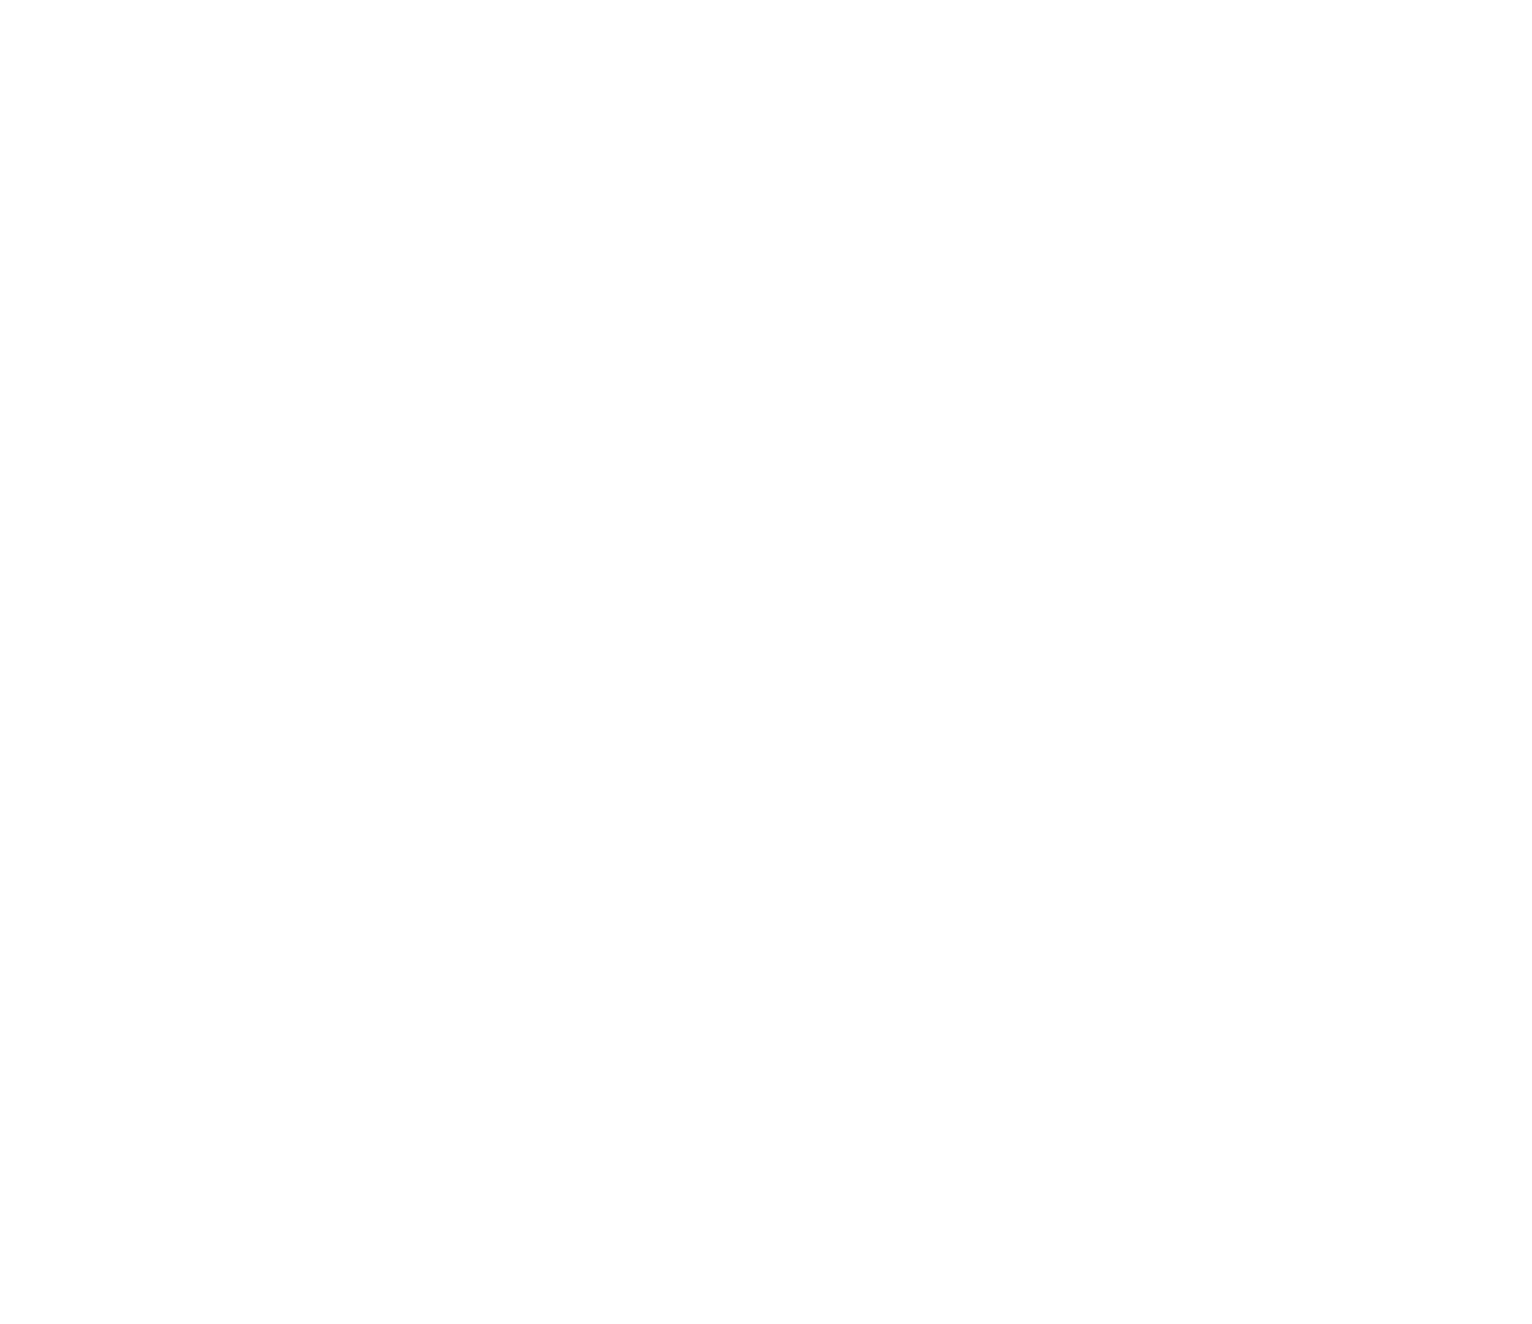 Crombie Real Estate Investment Trust logo for dark backgrounds (transparent PNG)